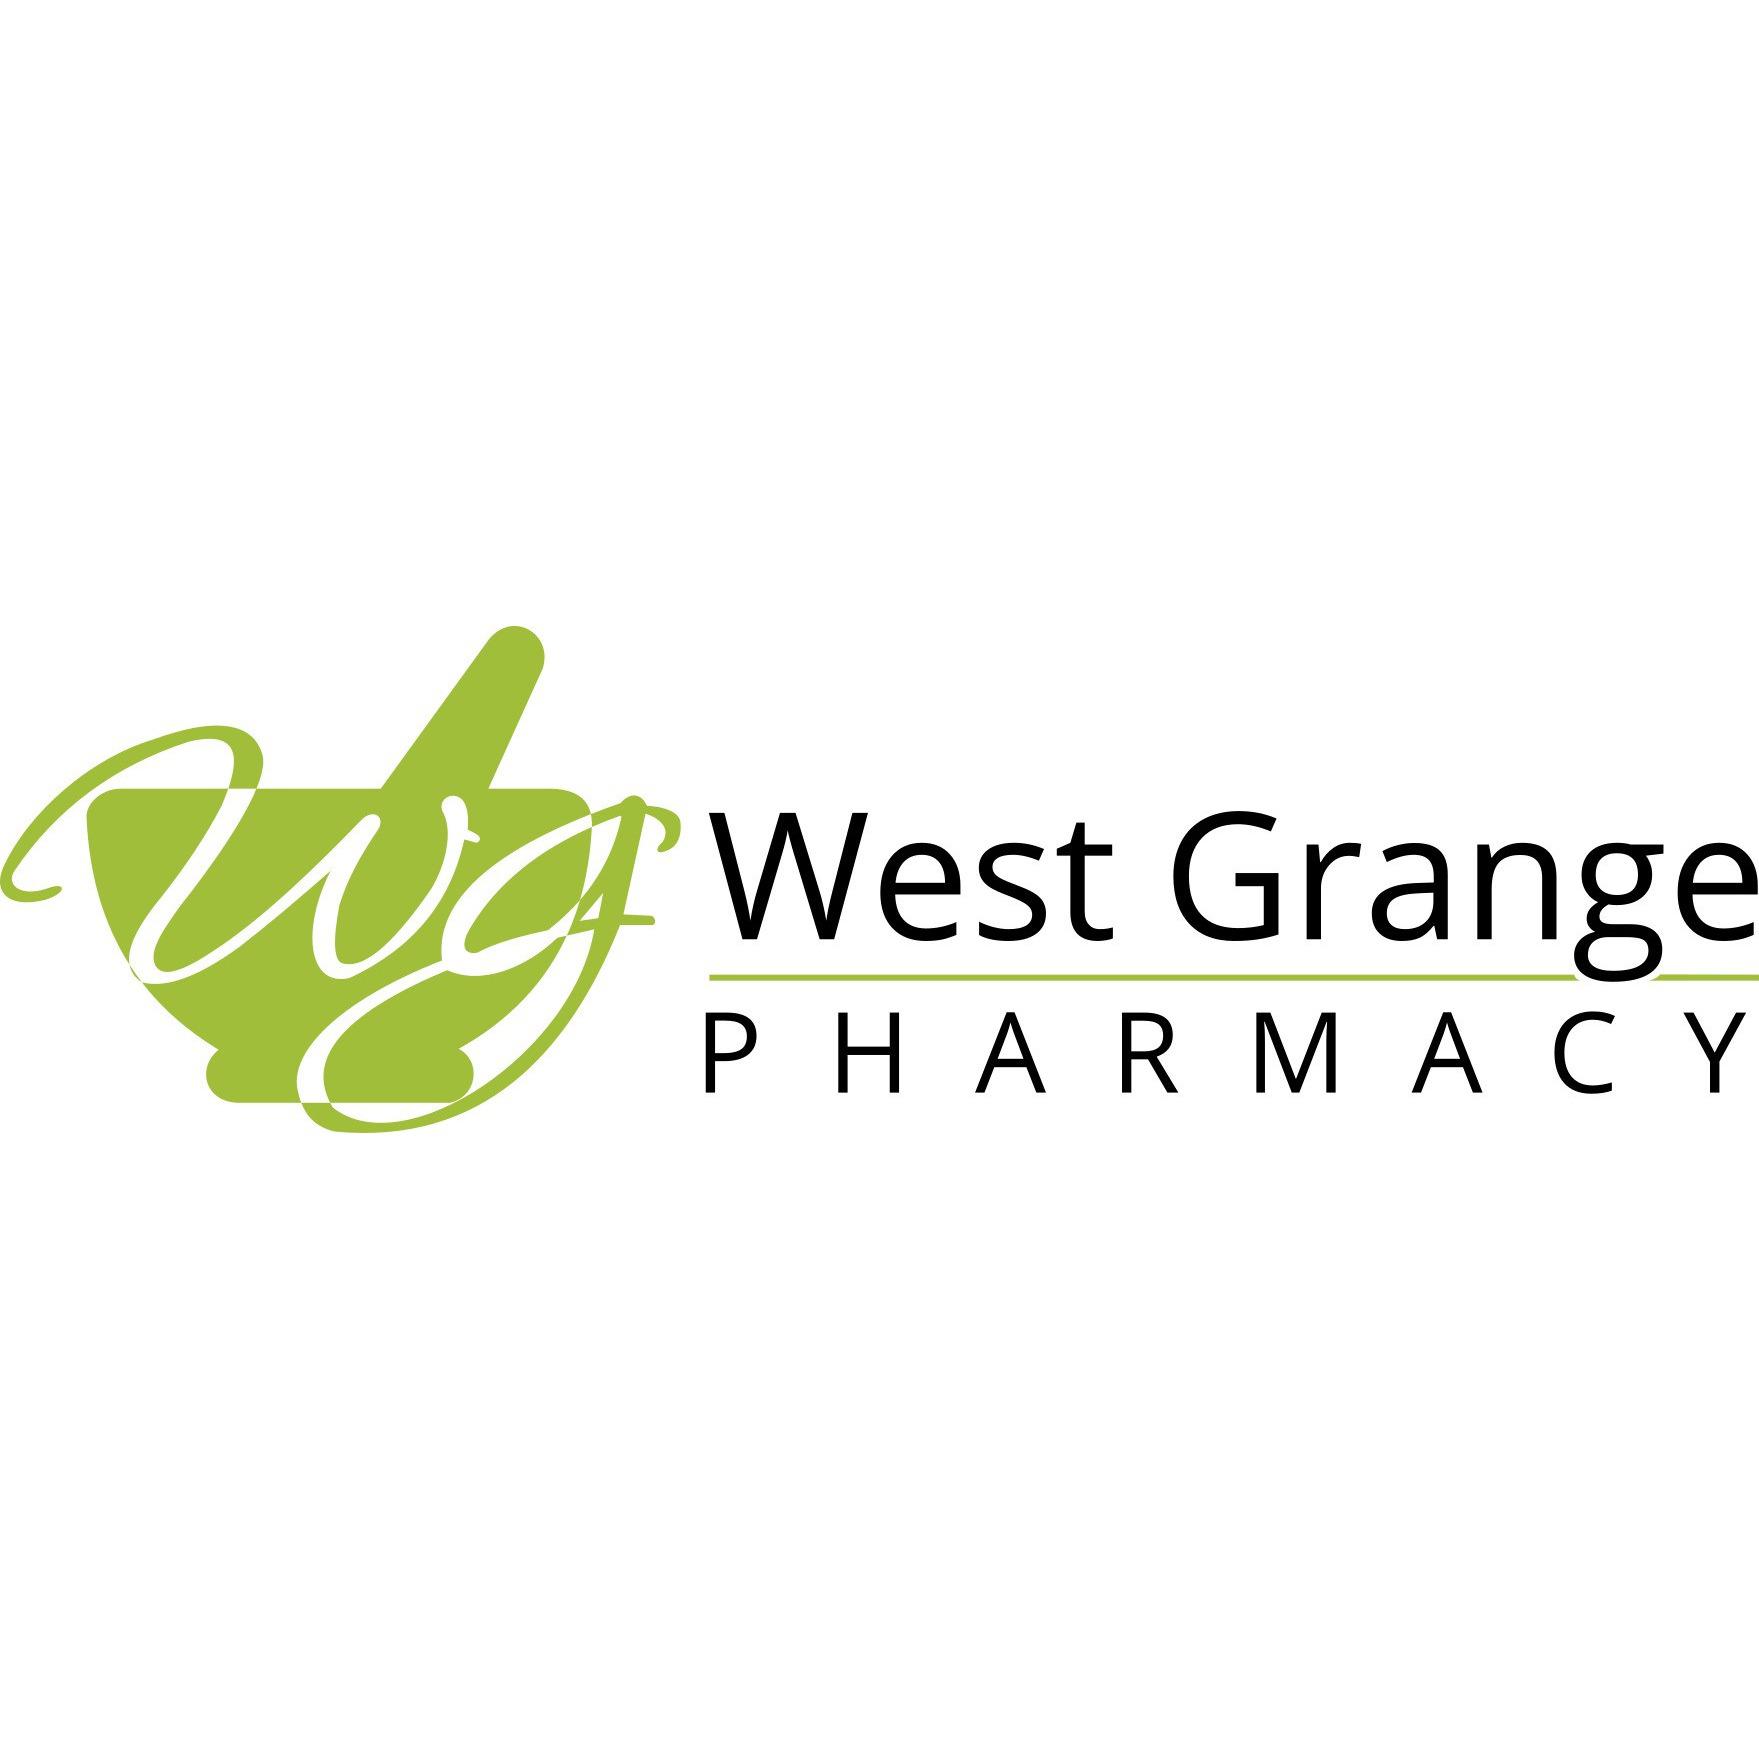 West Grange Pharmacy - Trenton, MI 48183 - (734)676-6622 | ShowMeLocal.com